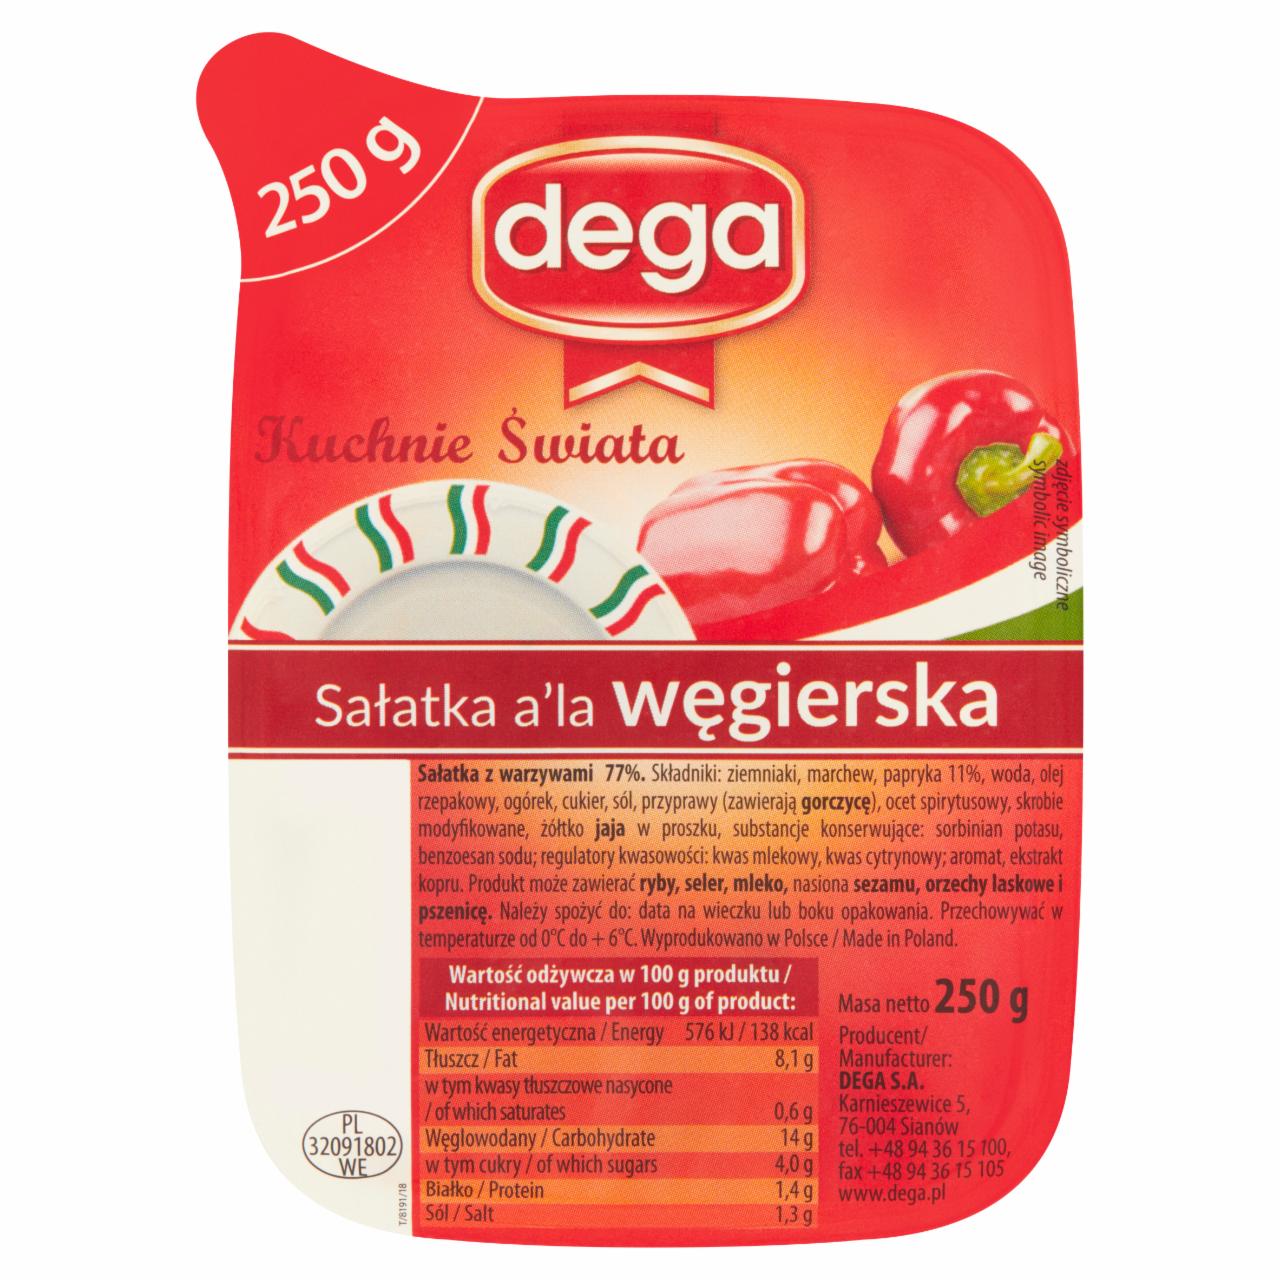 Photo - Dega Kuchnie Świata Hungarian Style Salad 250 g